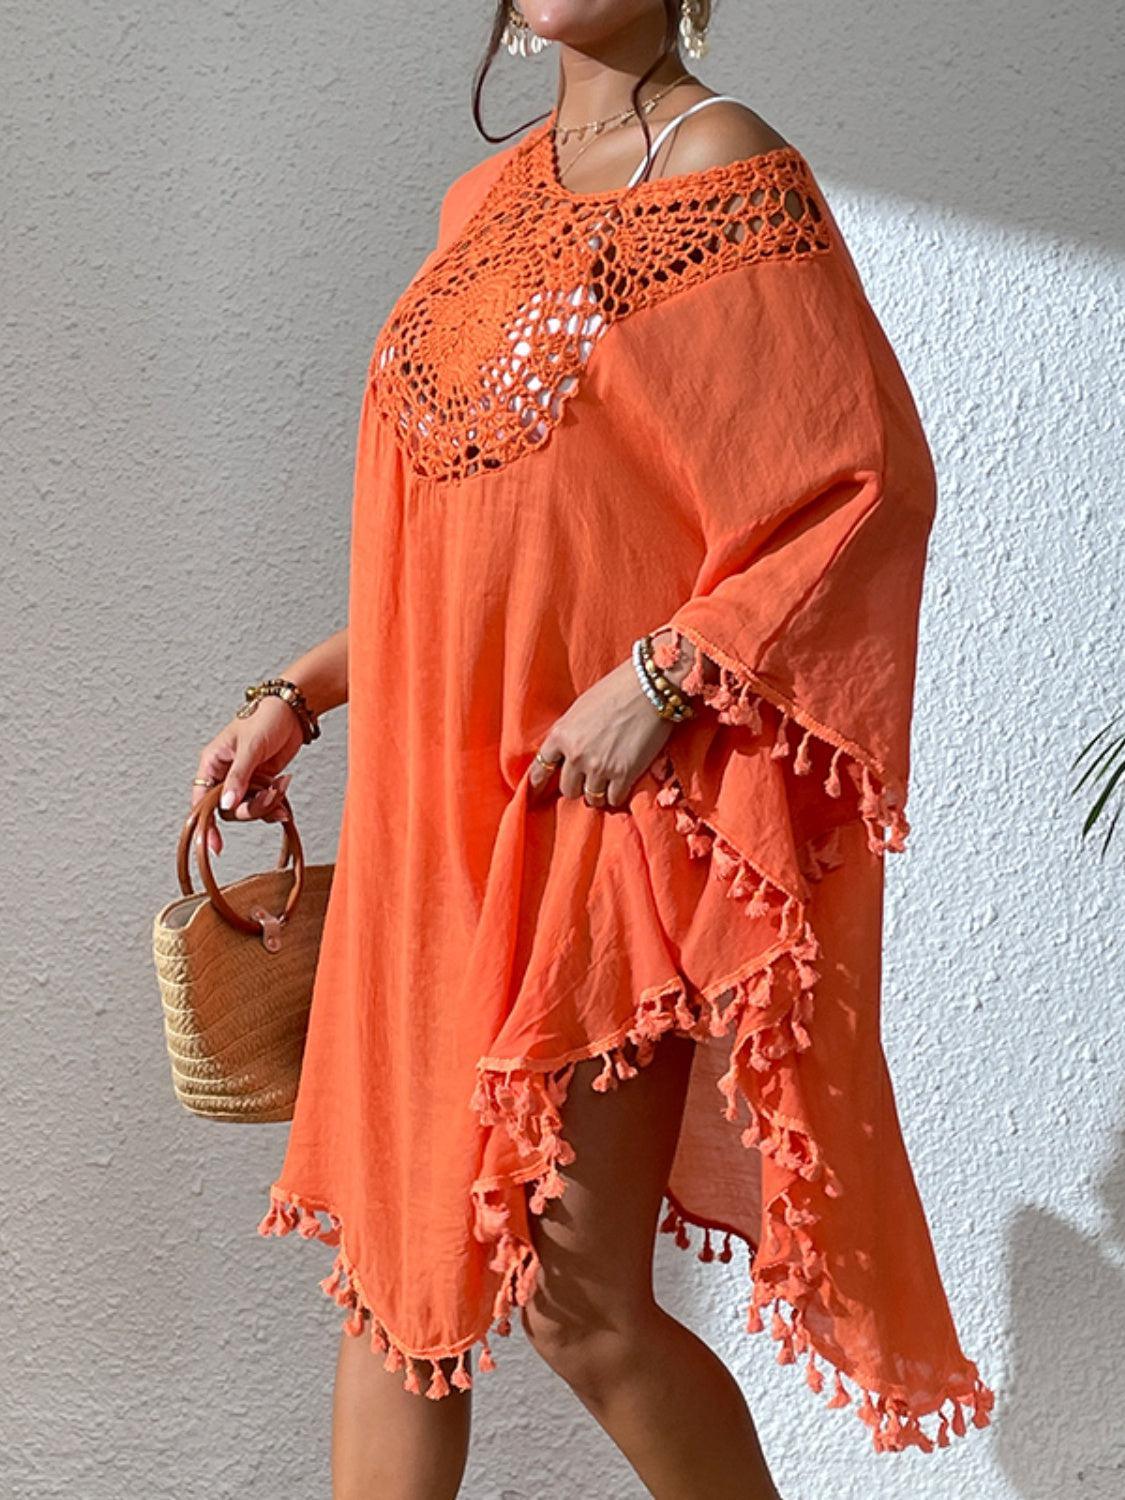 a woman in an orange dress is holding a basket